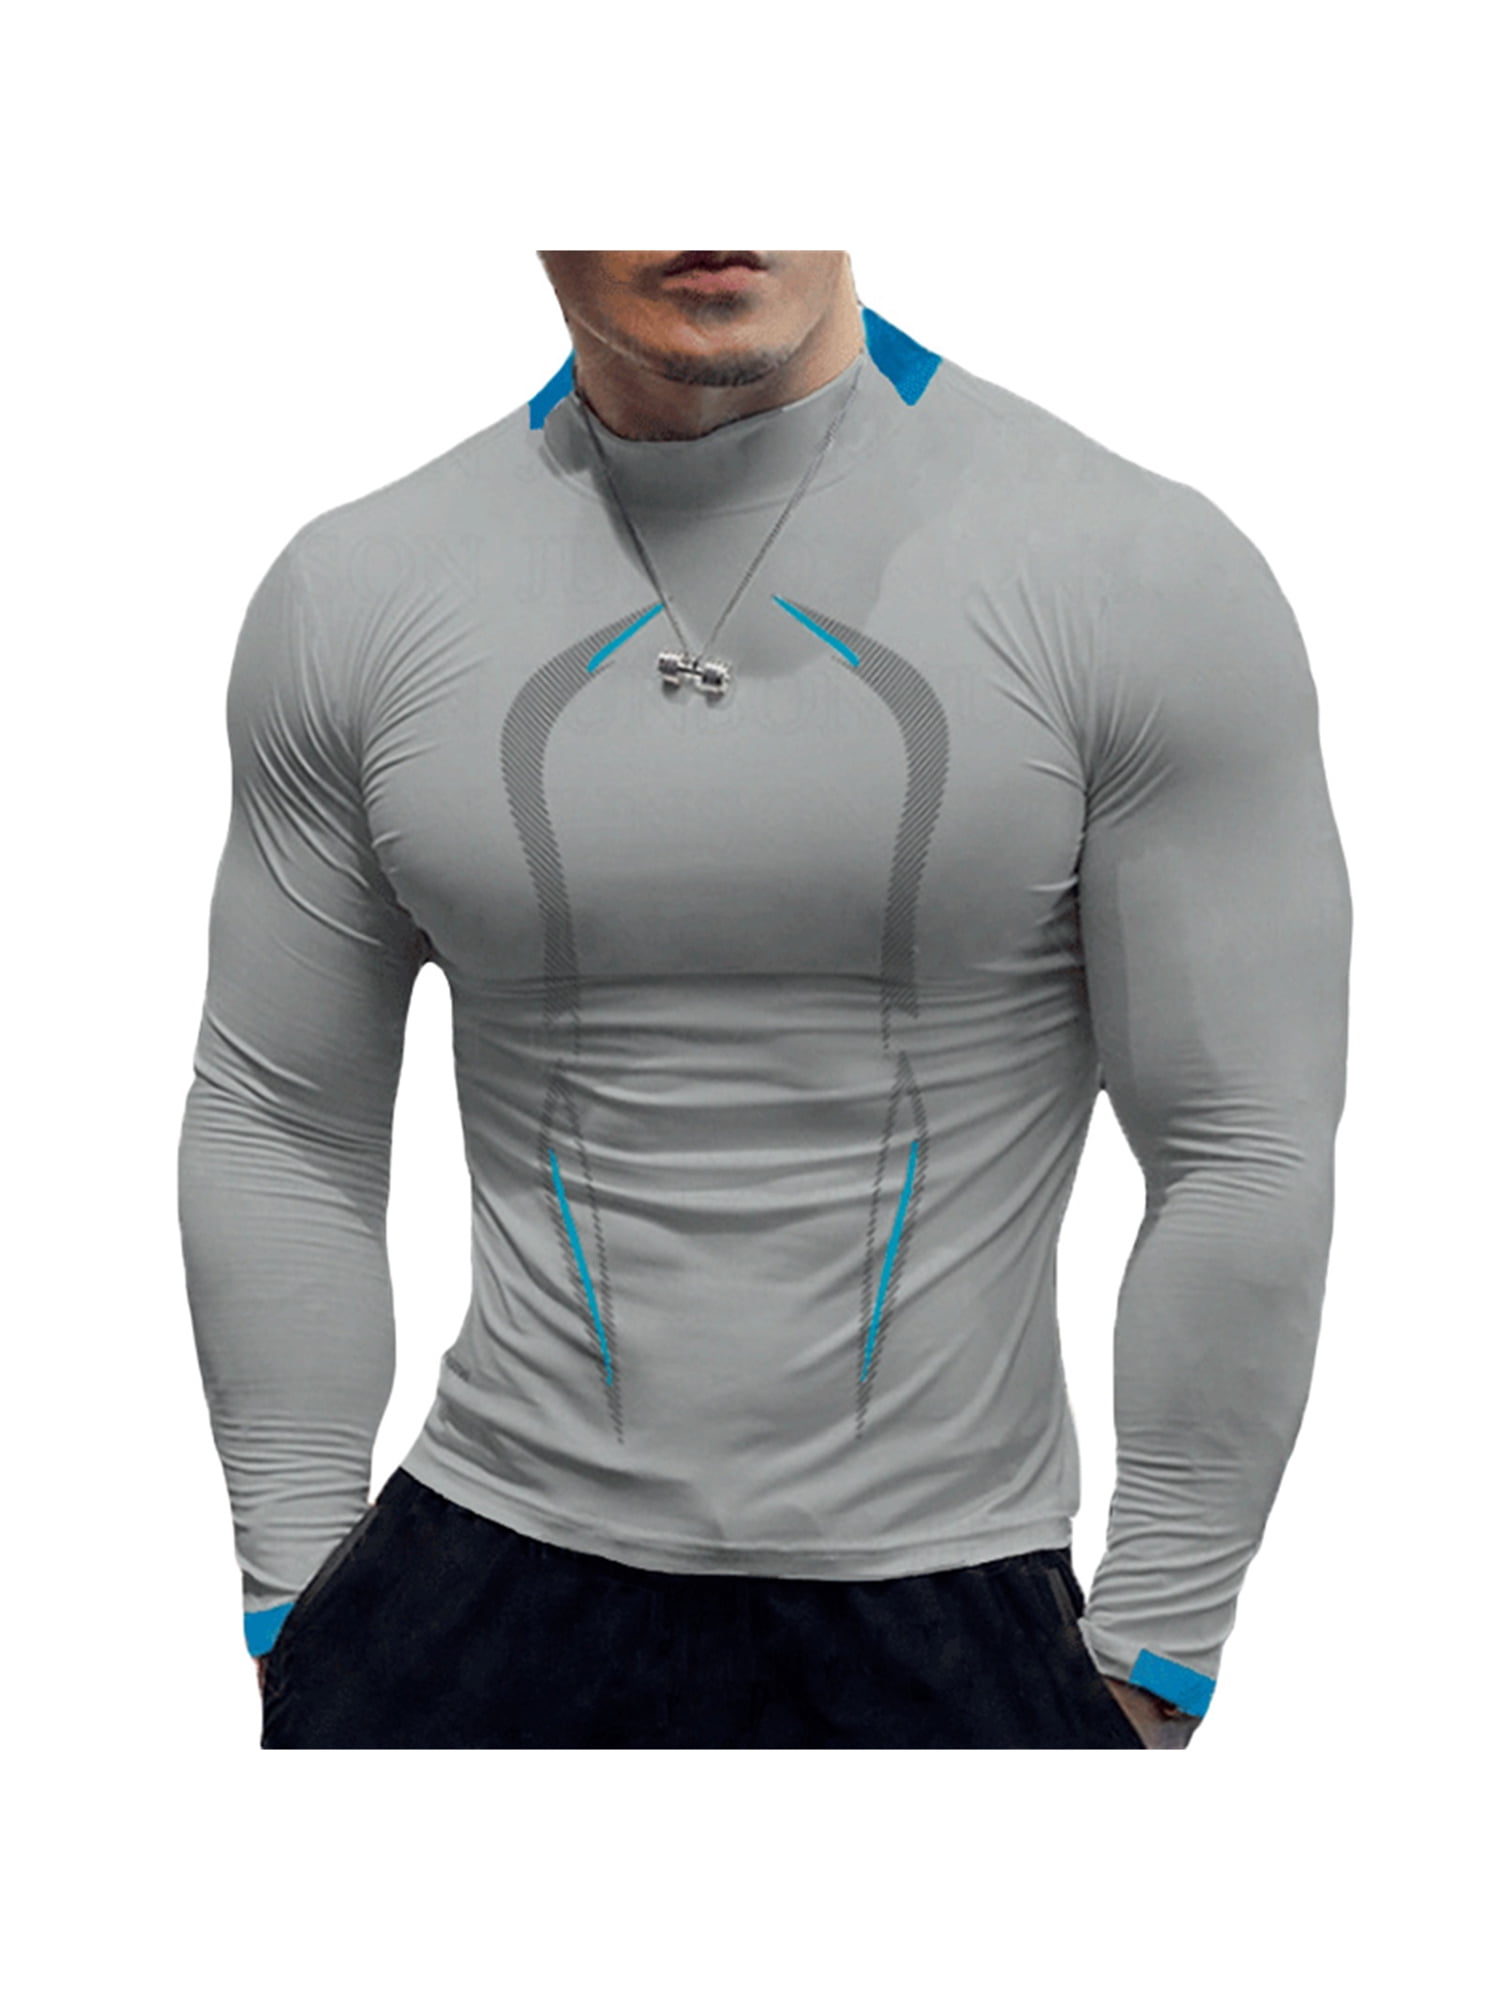 Bodybuilder Gifts, Sports Fitness Gift' Men's T-Shirt